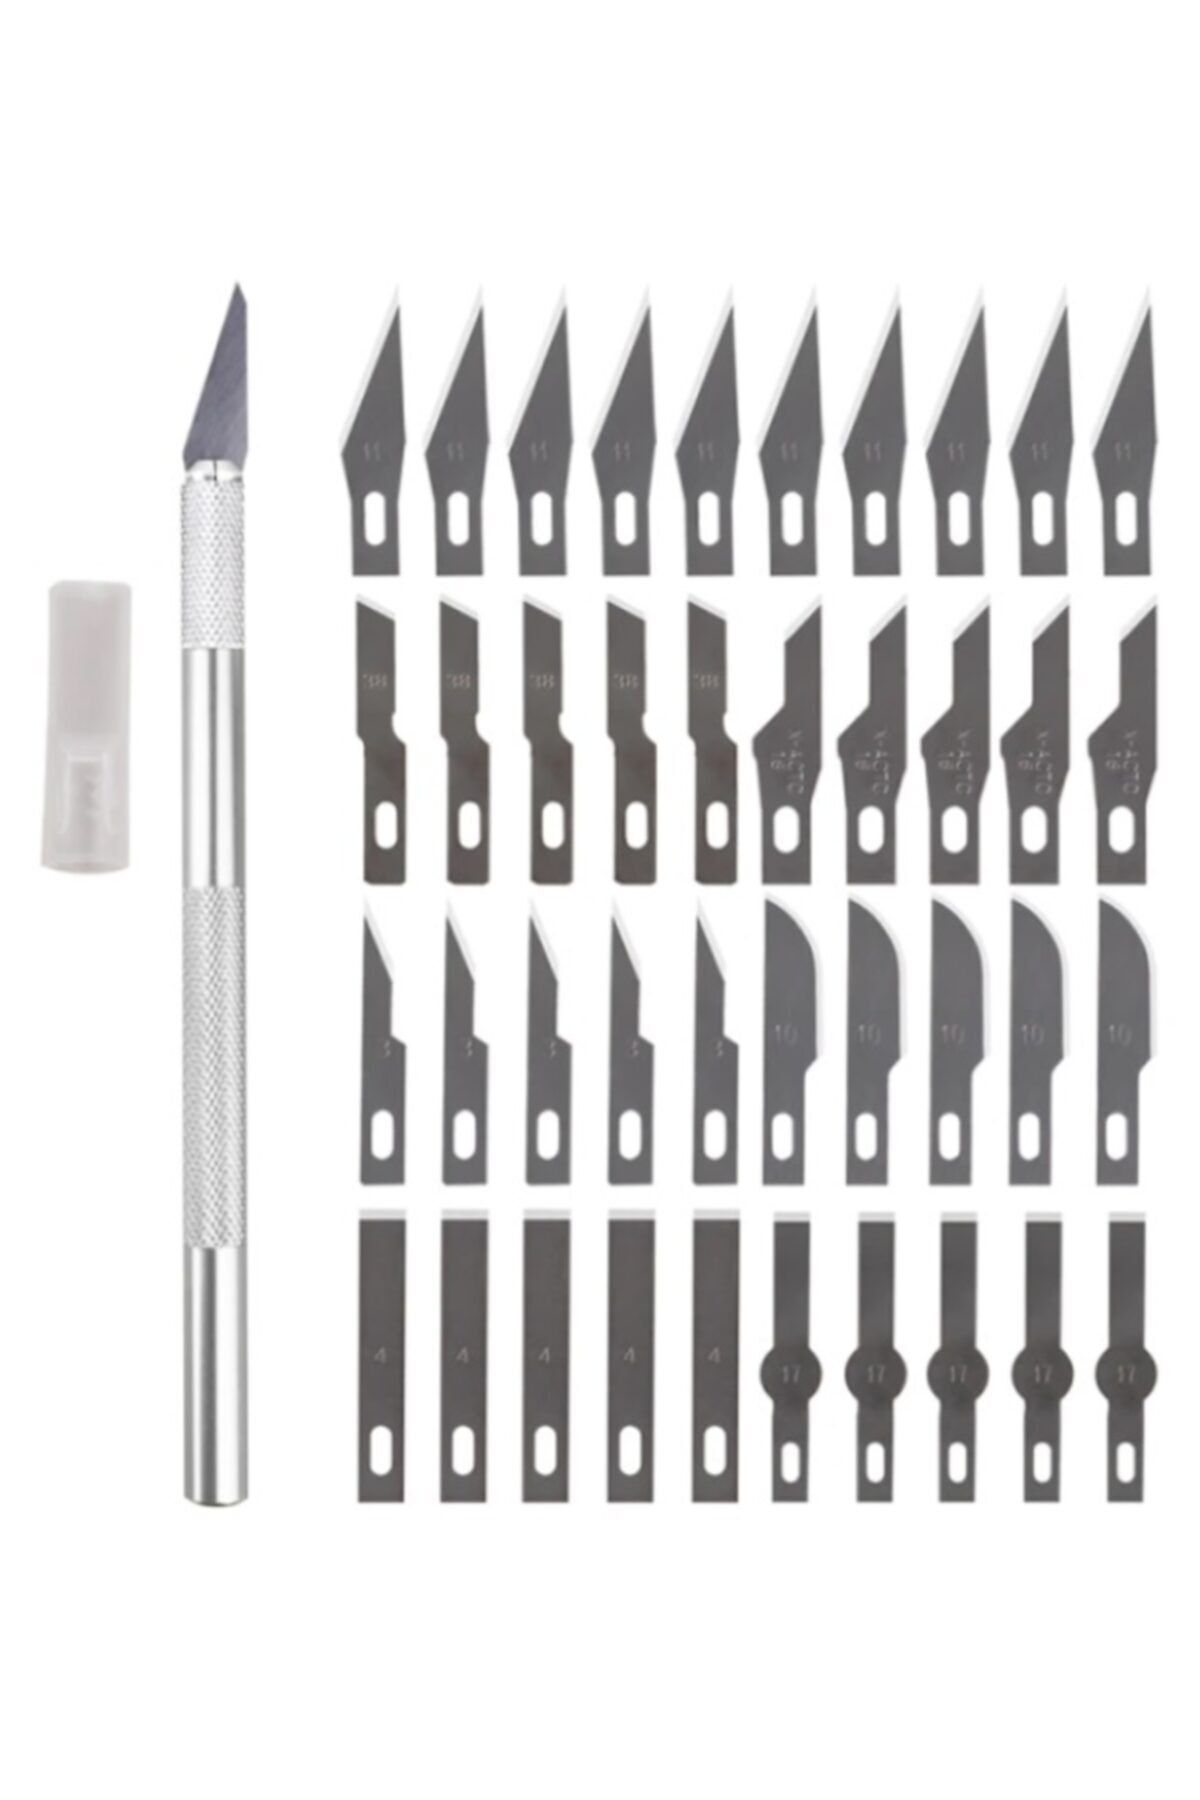 Kırkyama Patchwork Home 1 Adet Metal Ahşap Oyma El Aleti Hobi Bıçağı Neşter Bisturi Tipi - Gümüş Renk + 40 Adet Yedek Bıçak